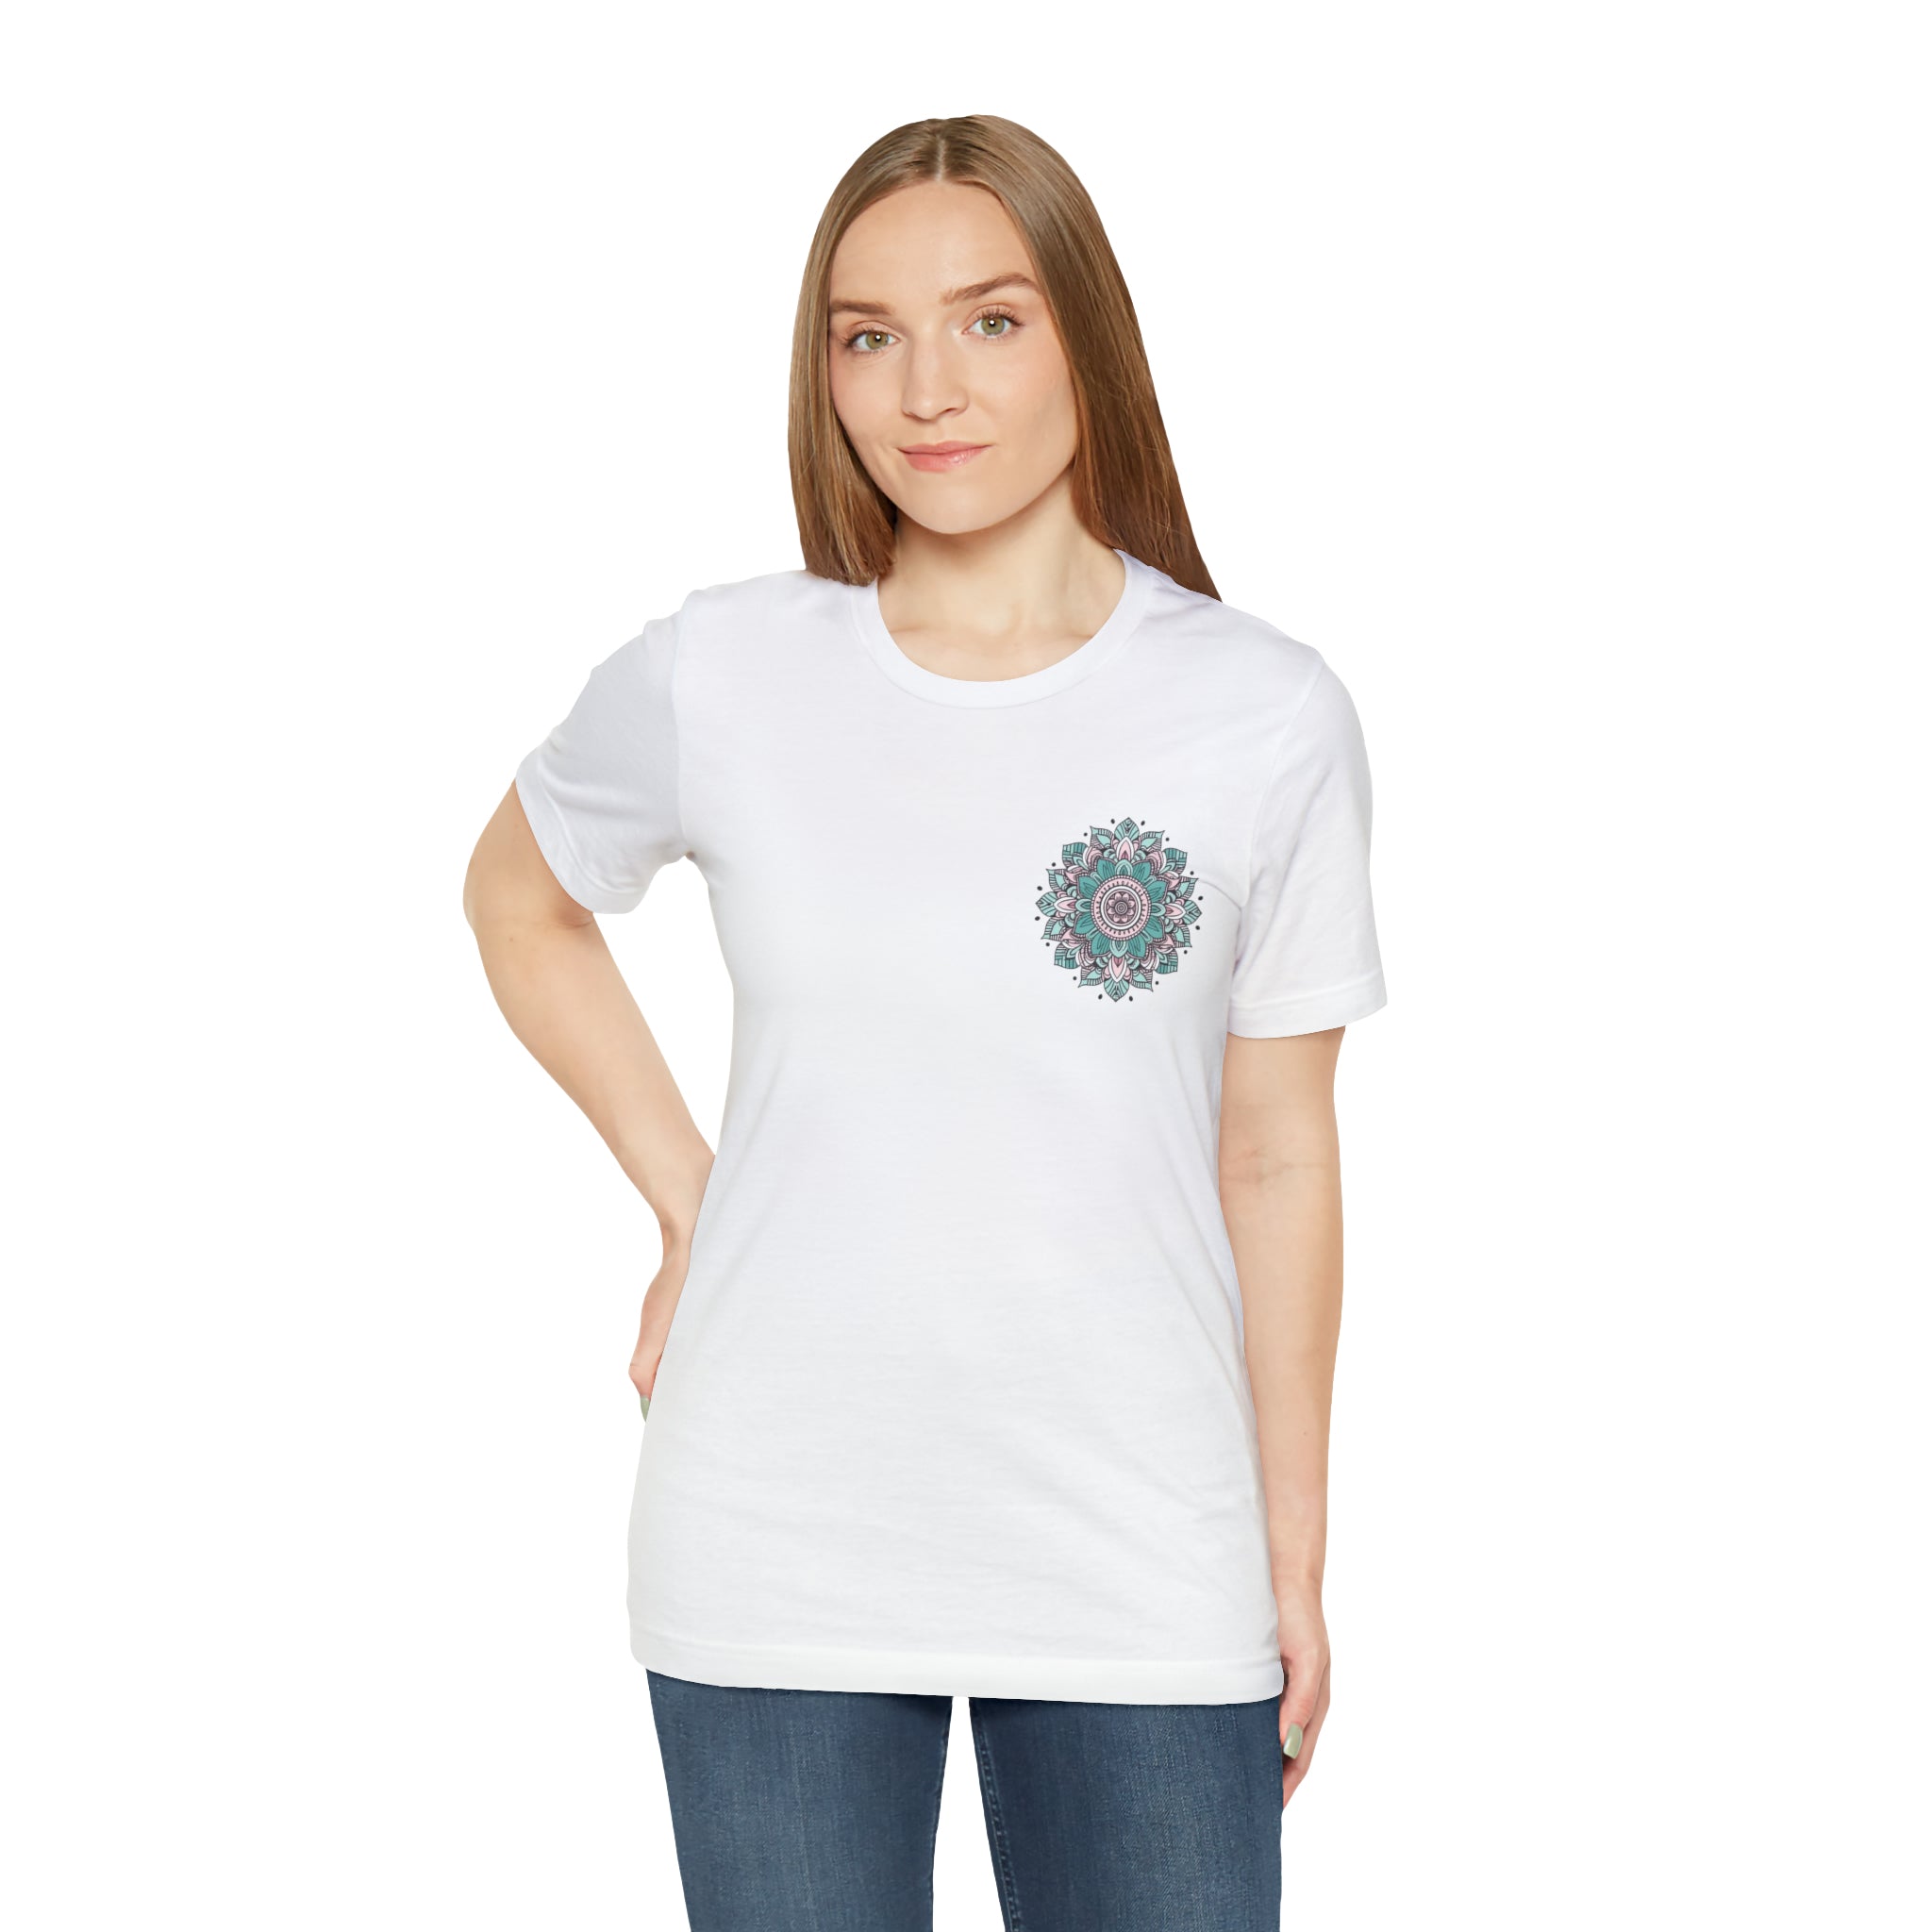 Tranquility Unisex Cotton T-Shirt